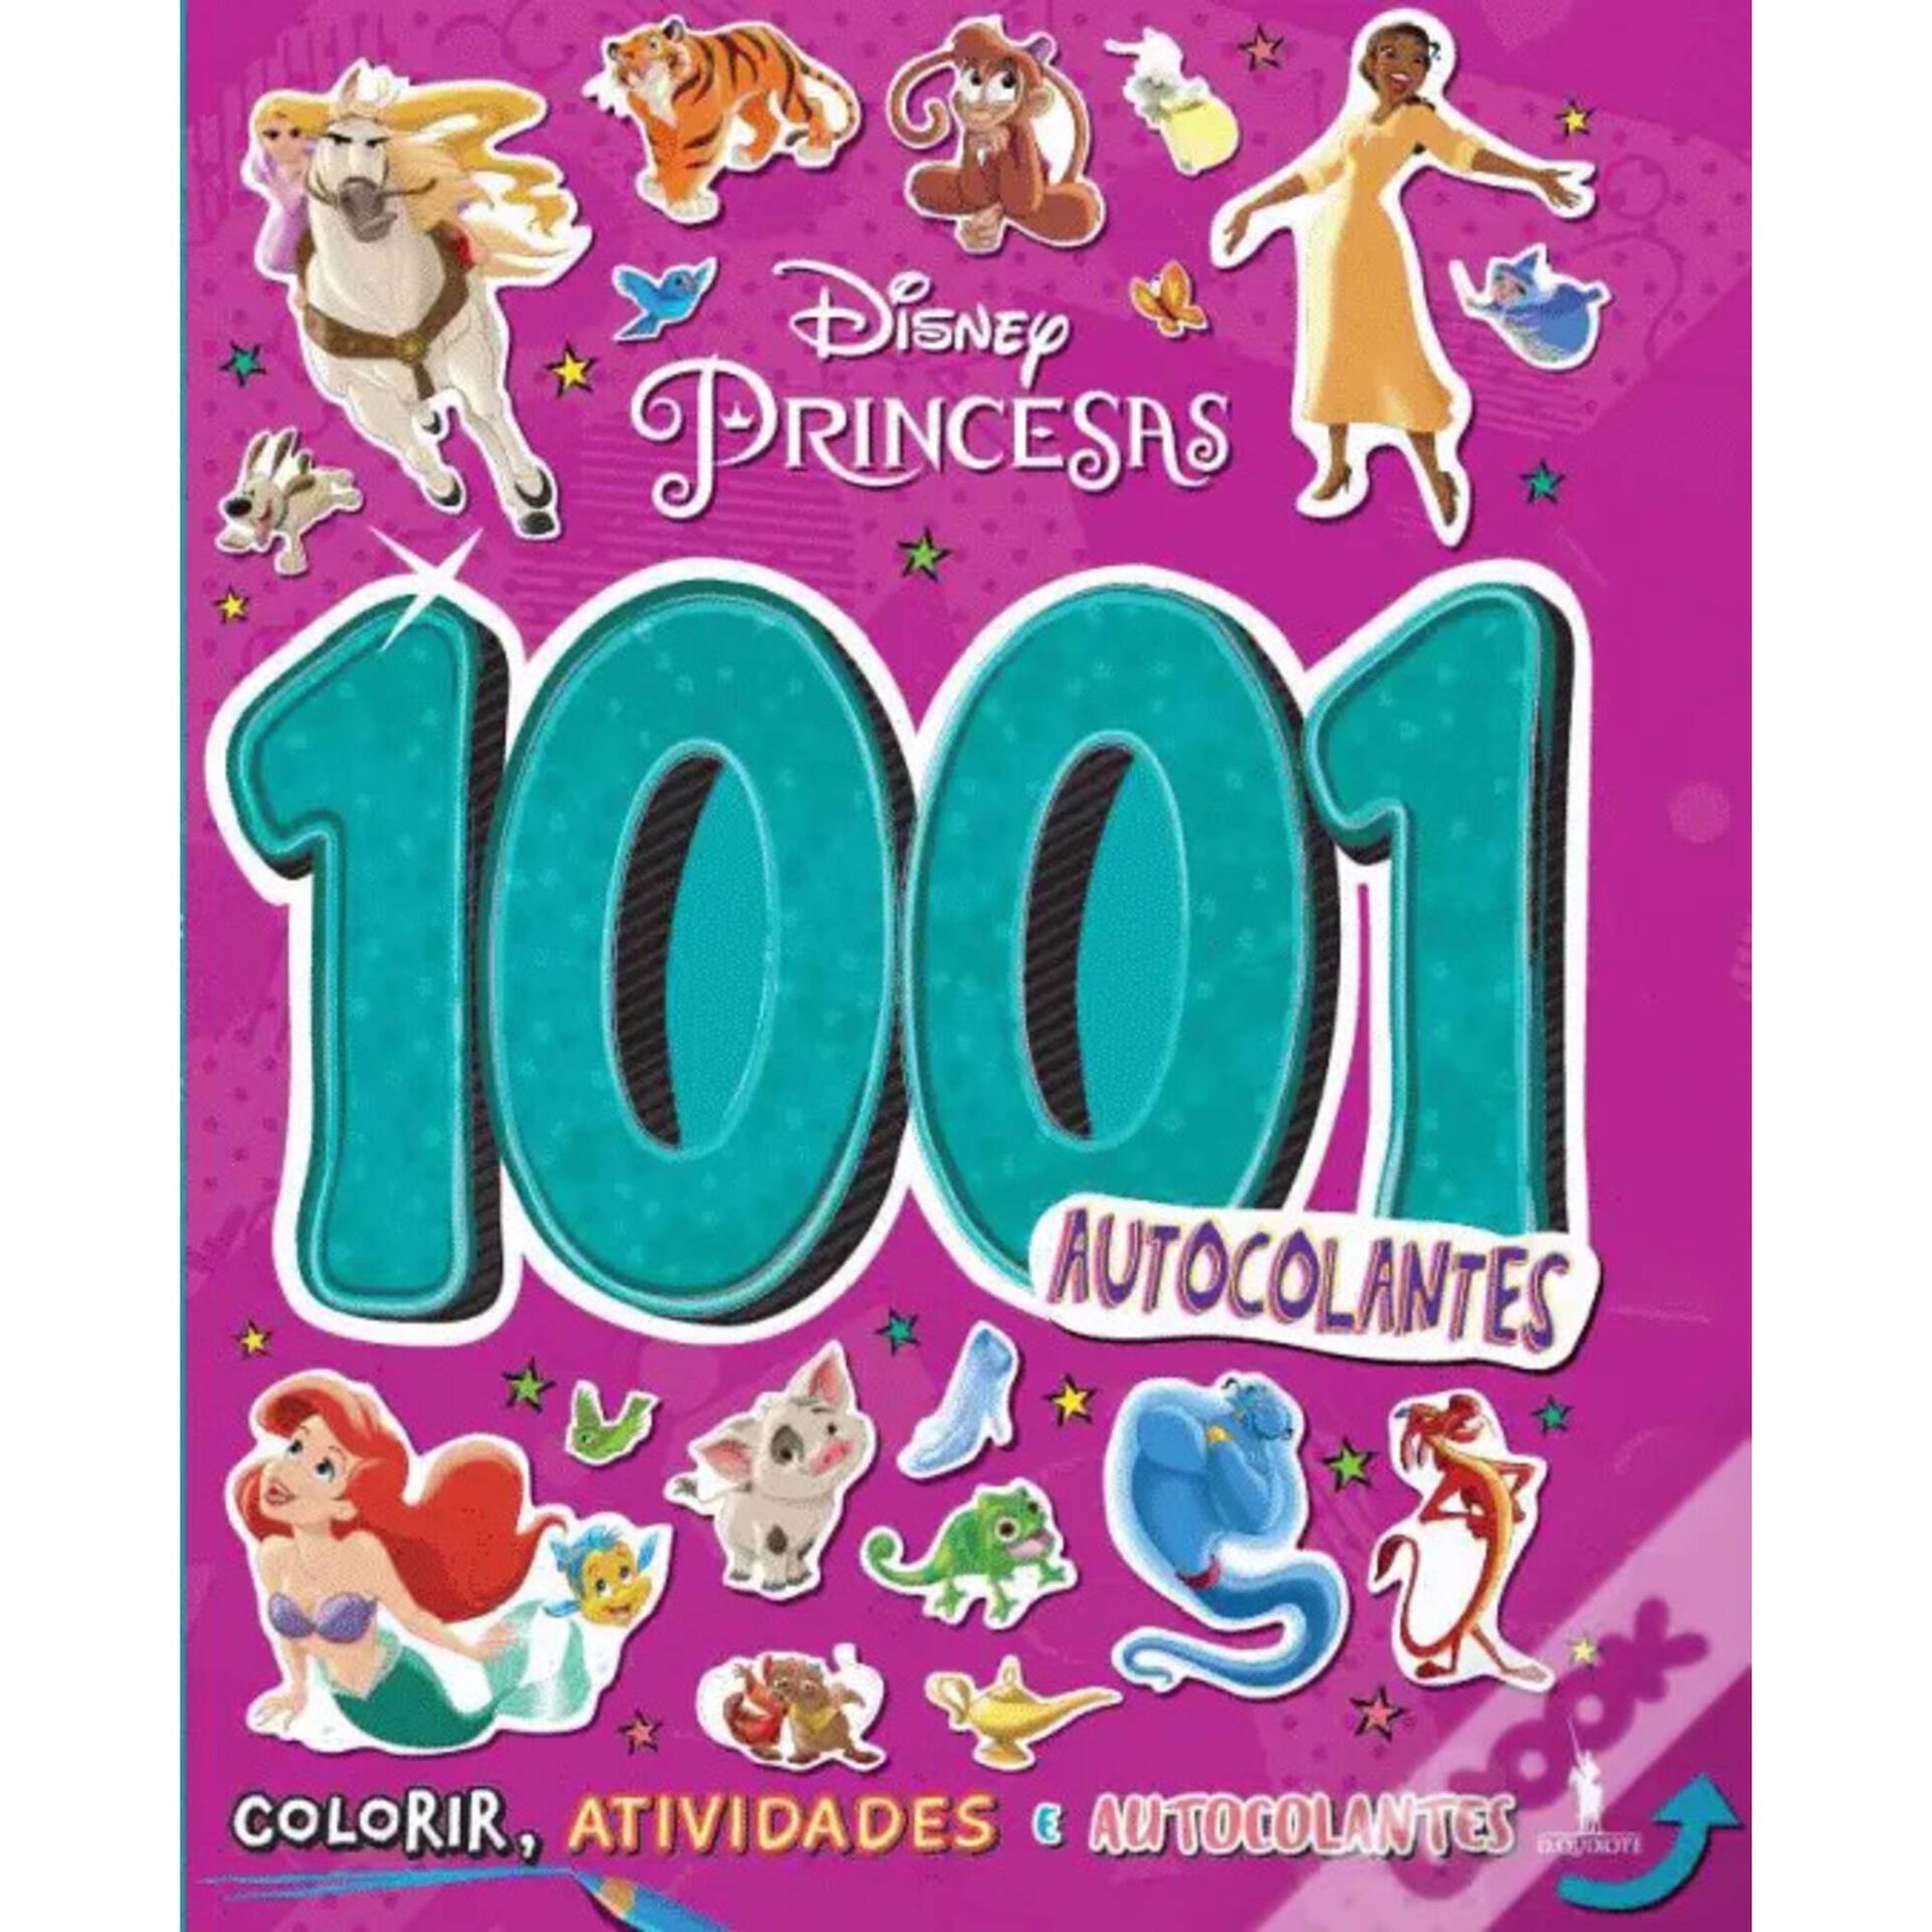 1001 Autocolantes Princesas